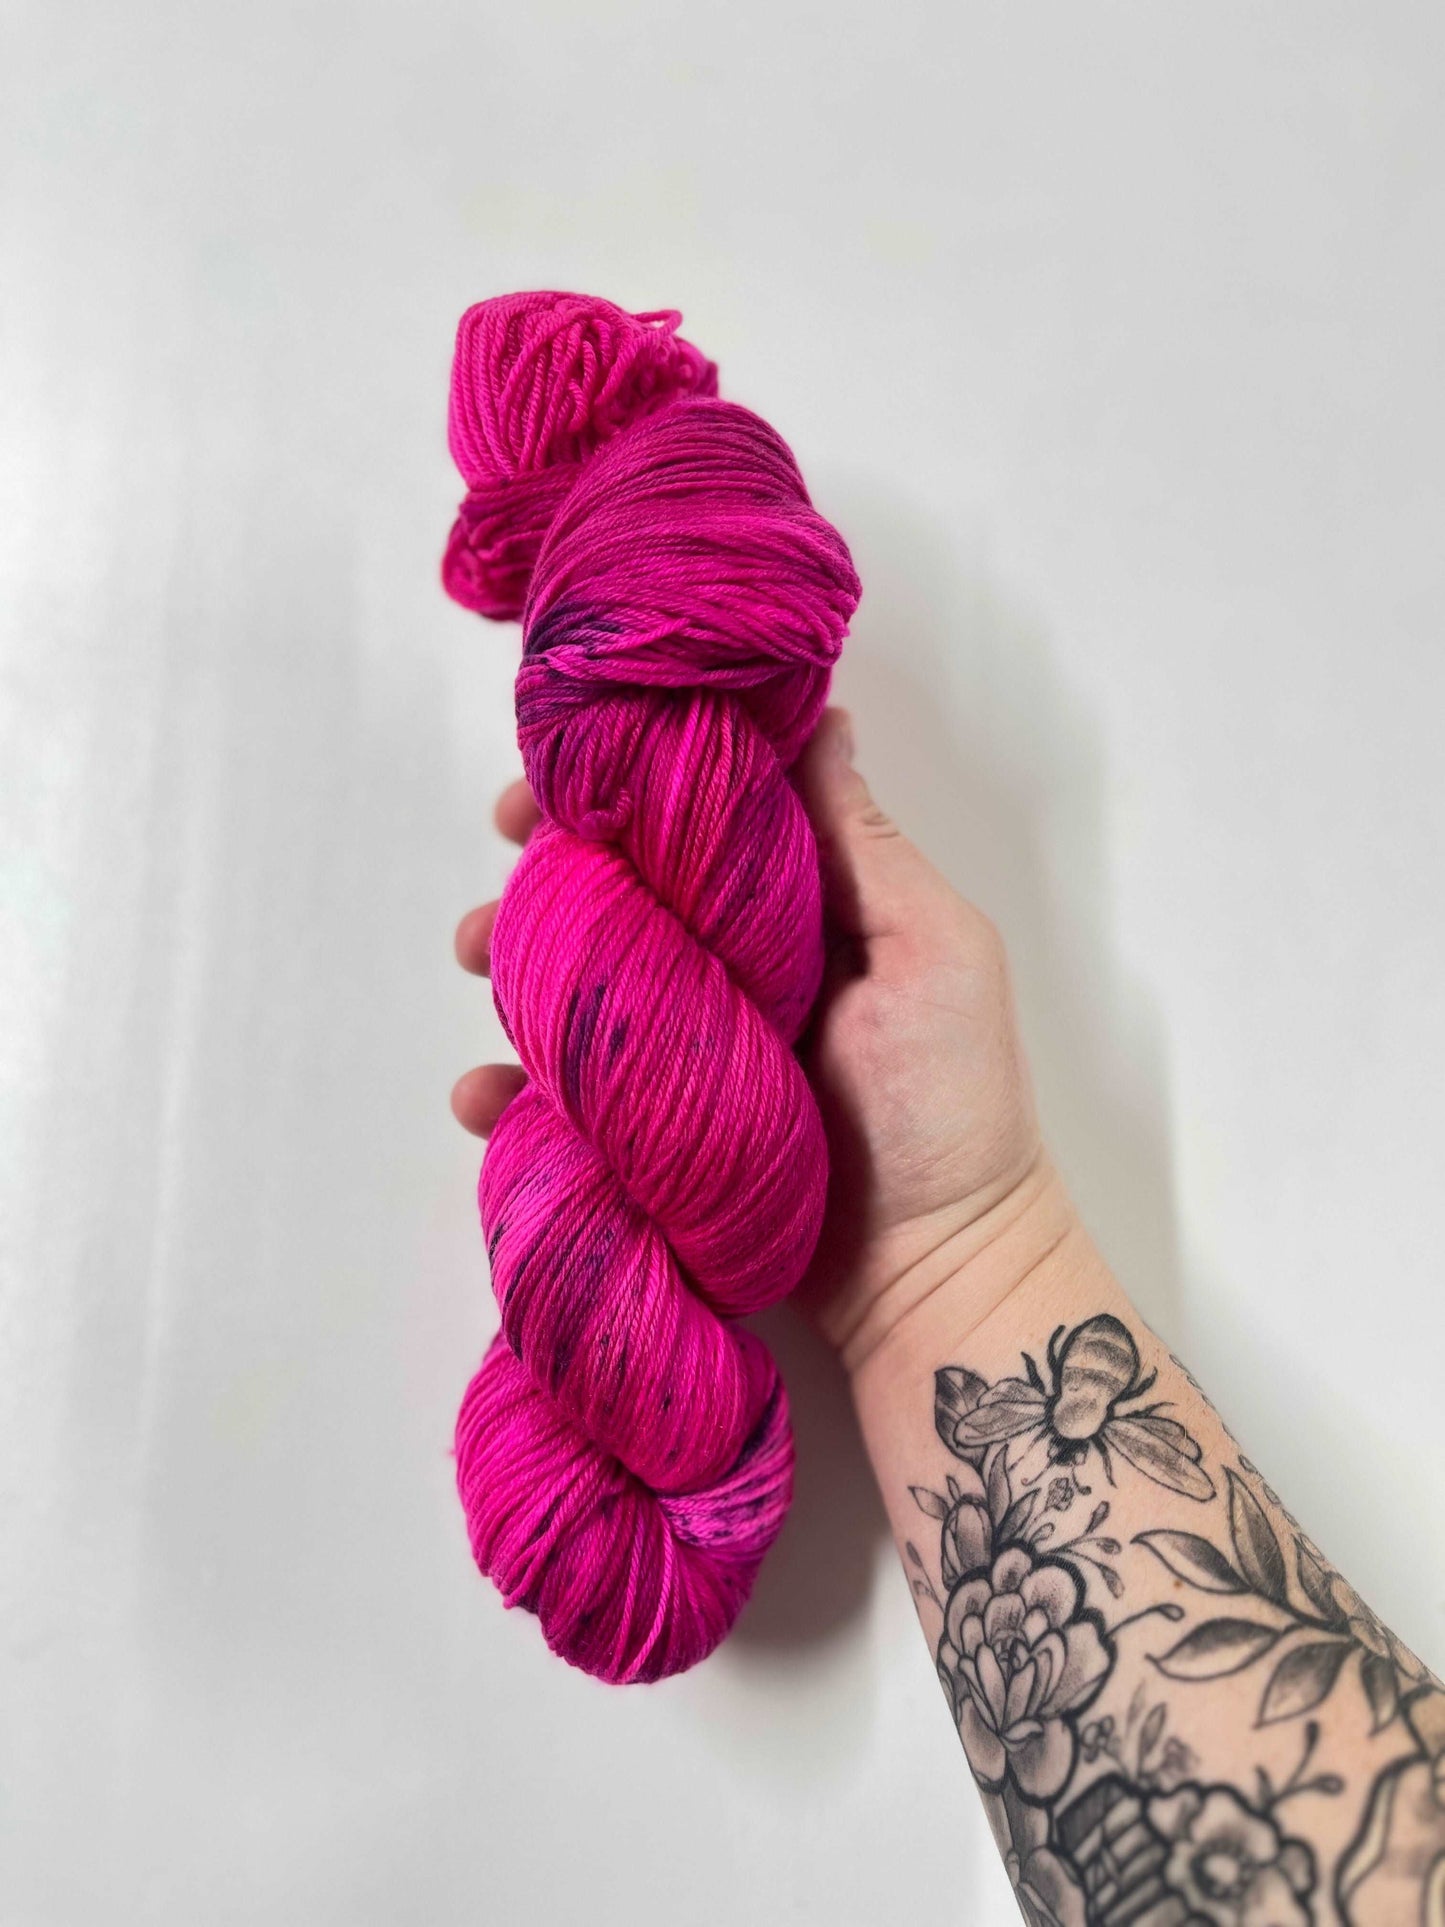 Cherry Blossom - Wool base | Inspired by Margot 